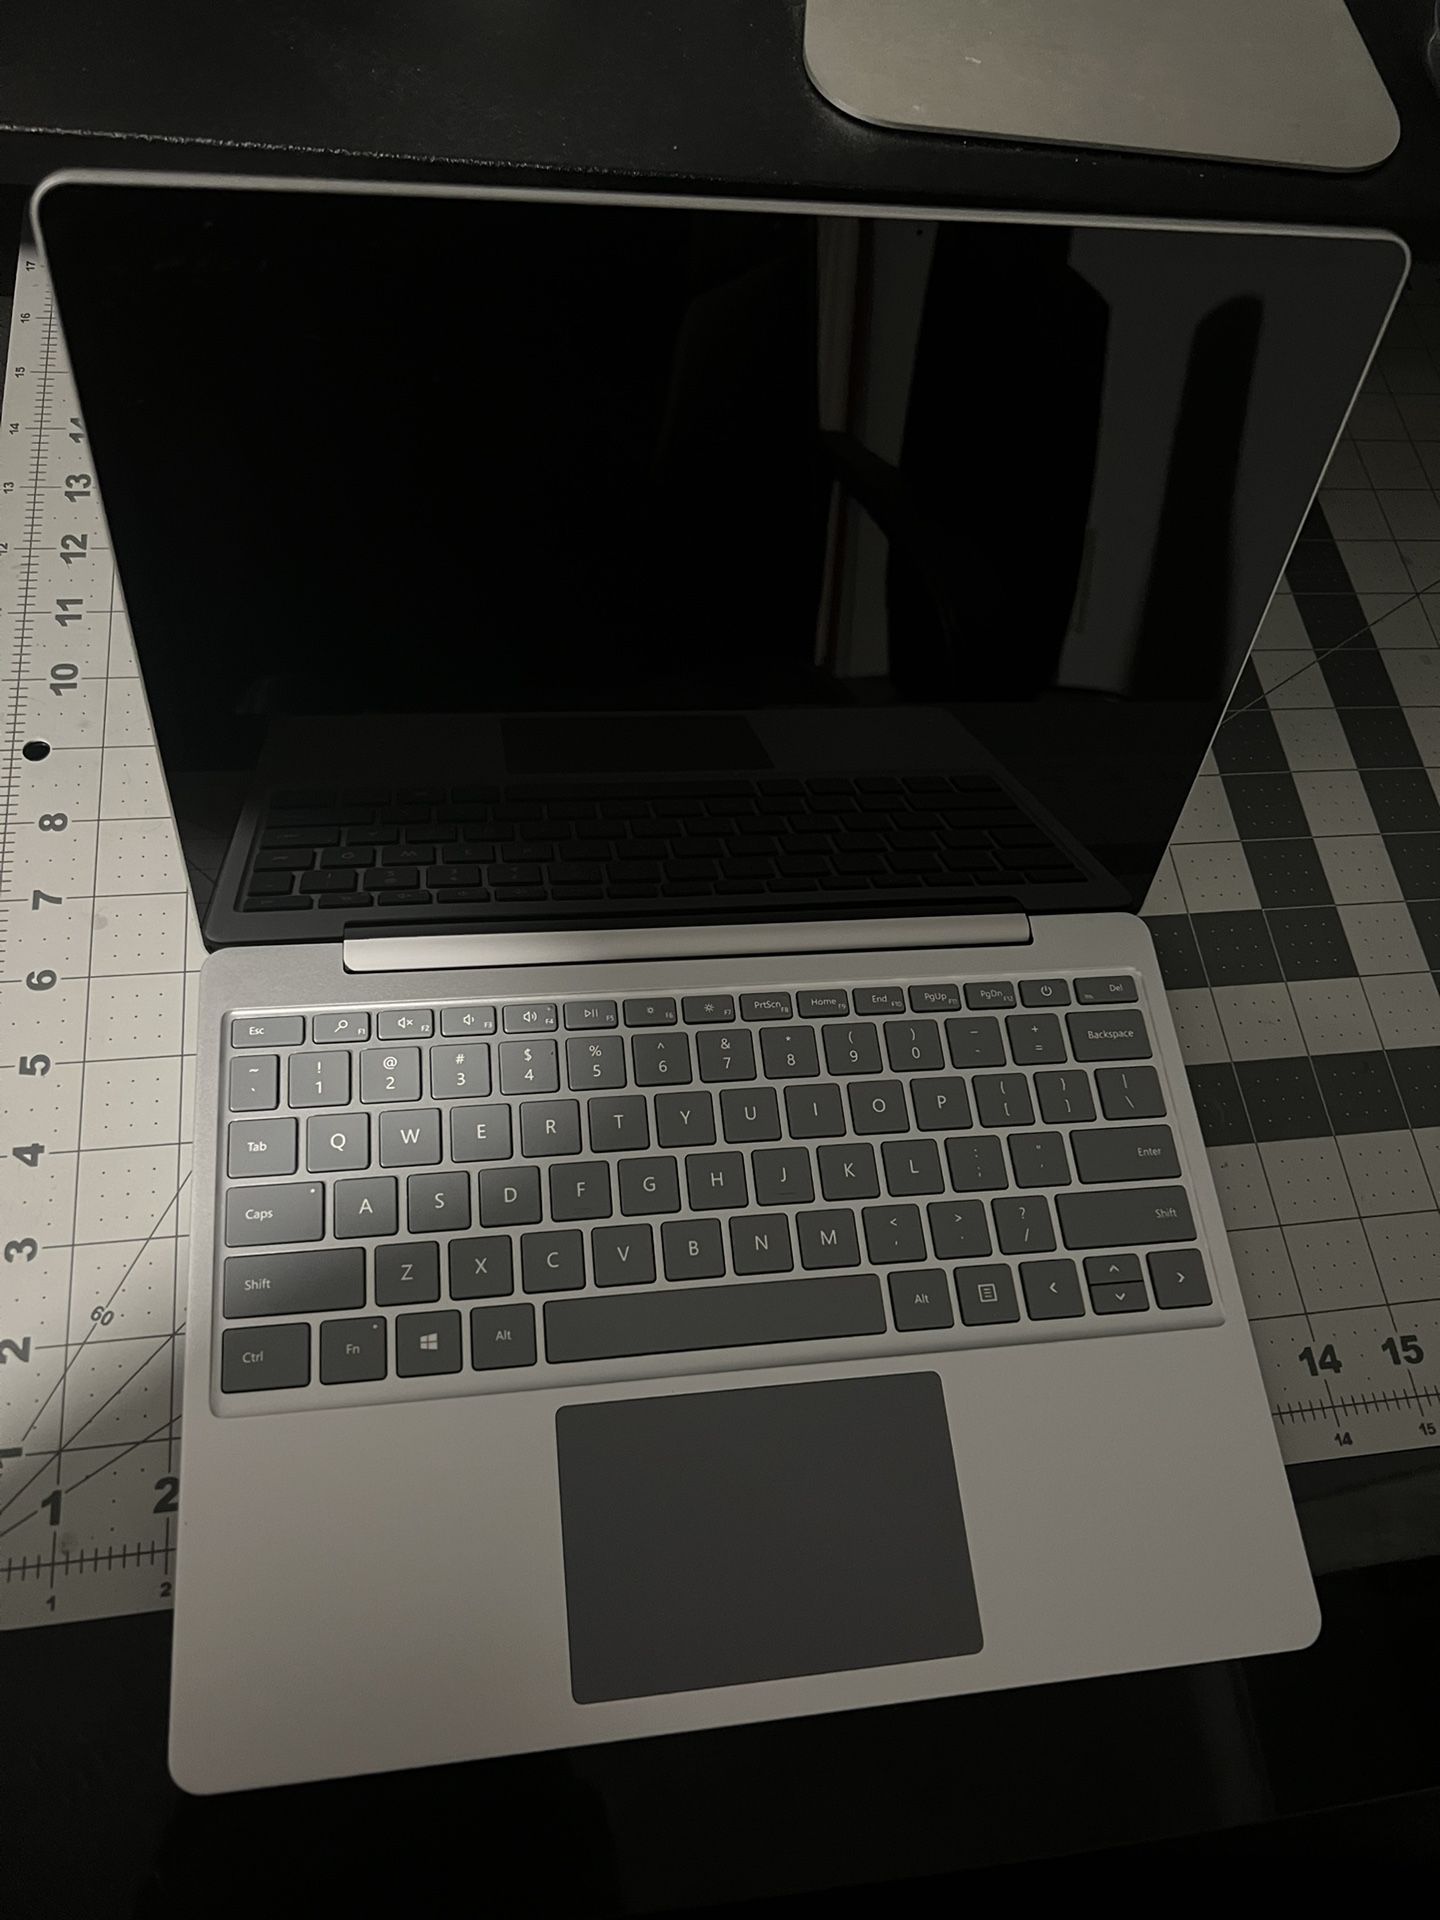 Microsoft Surface Go Laptop